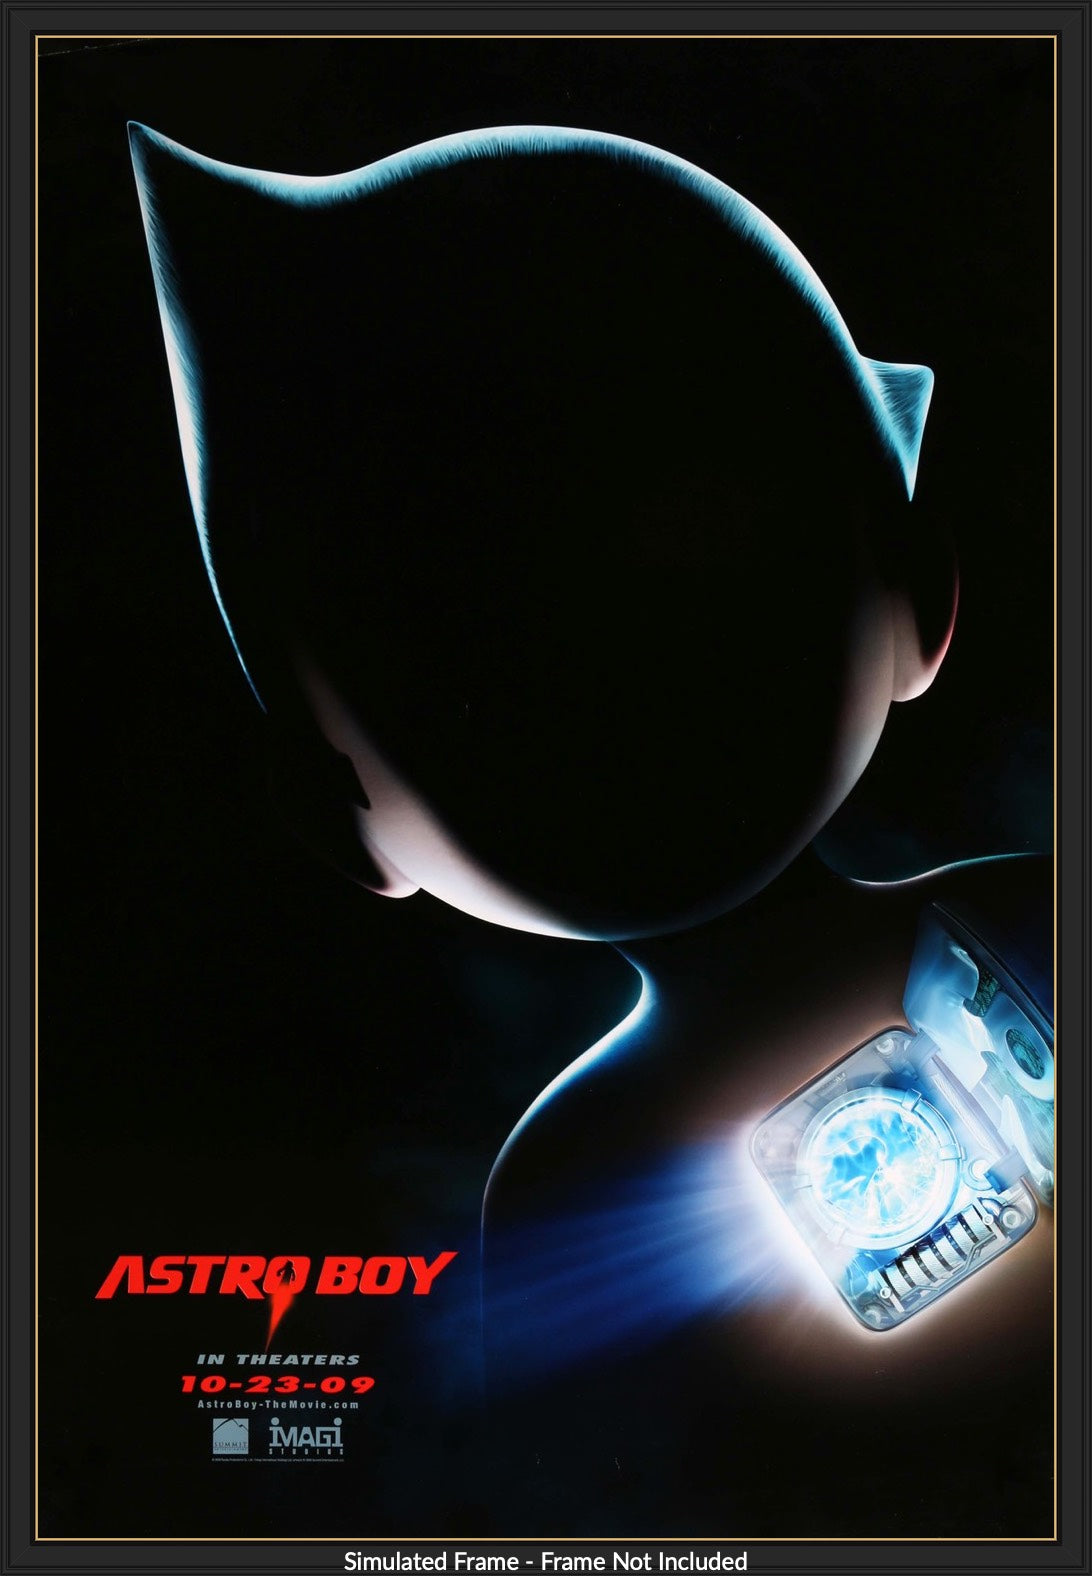 Astro Boy (2009) original movie poster for sale at Original Film Art